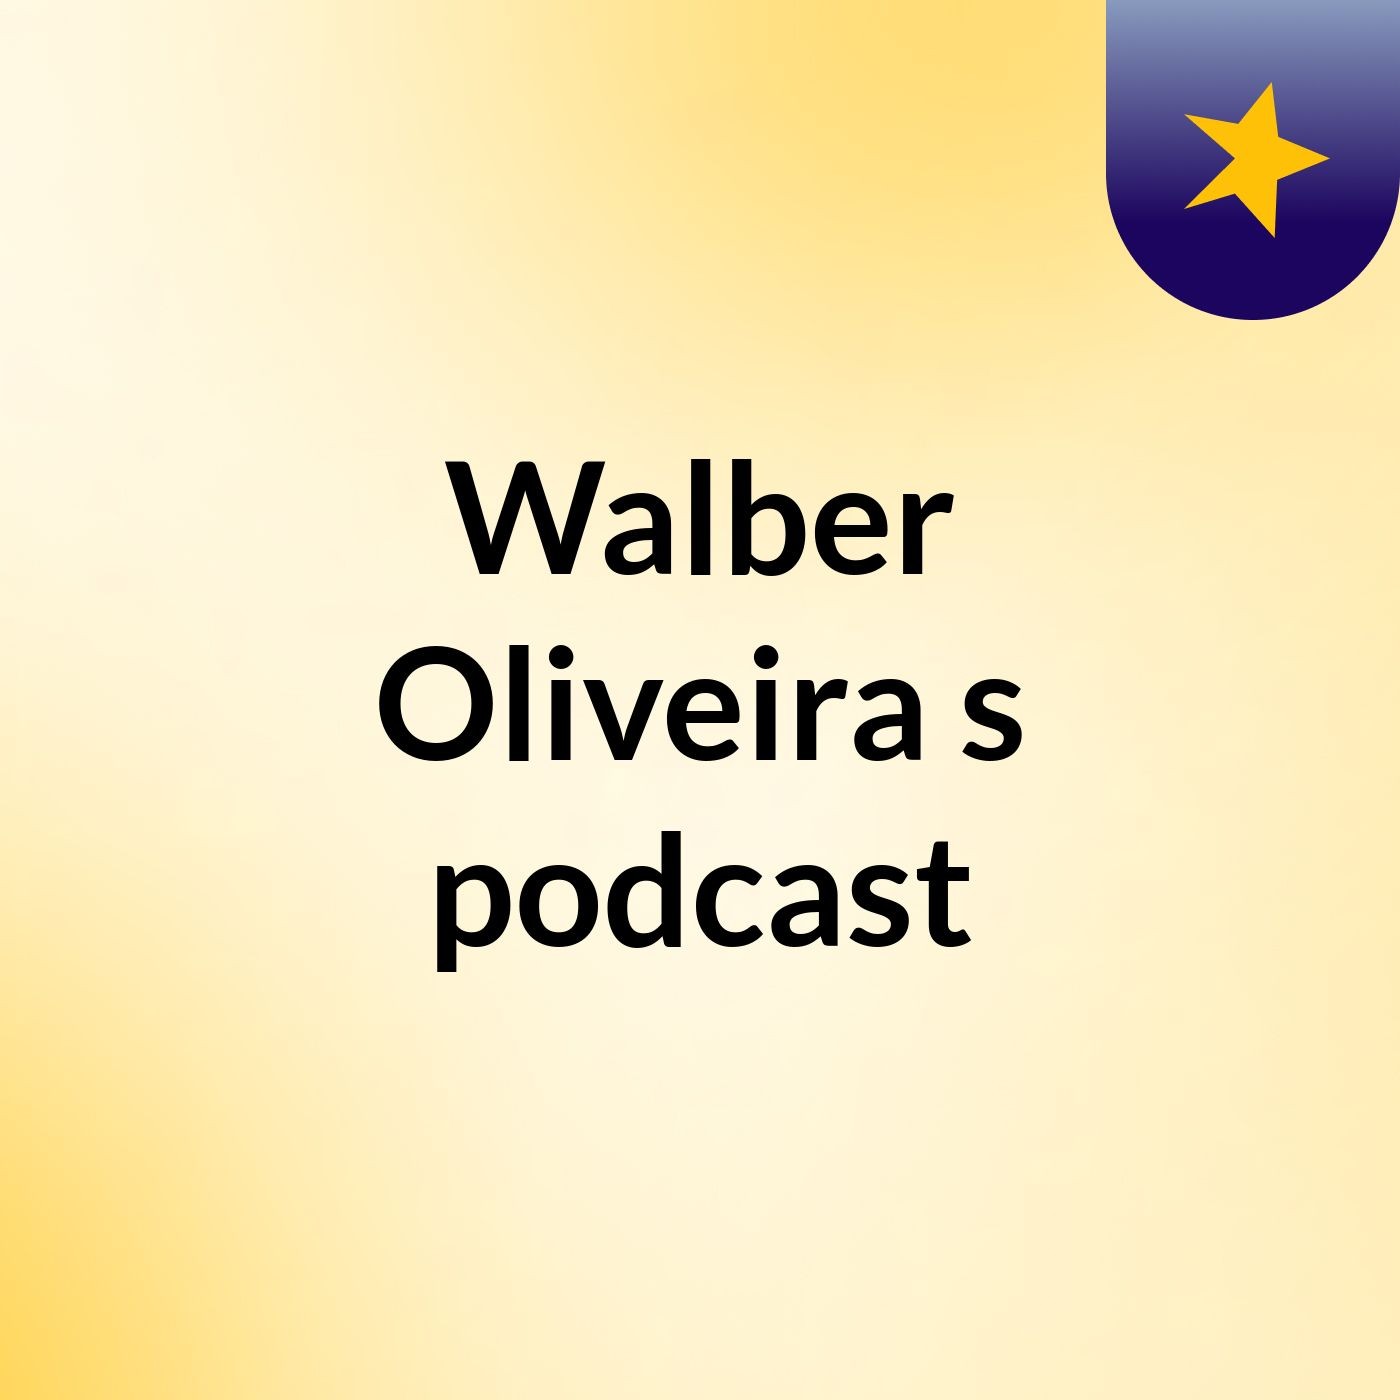 Walber Oliveira's podcast